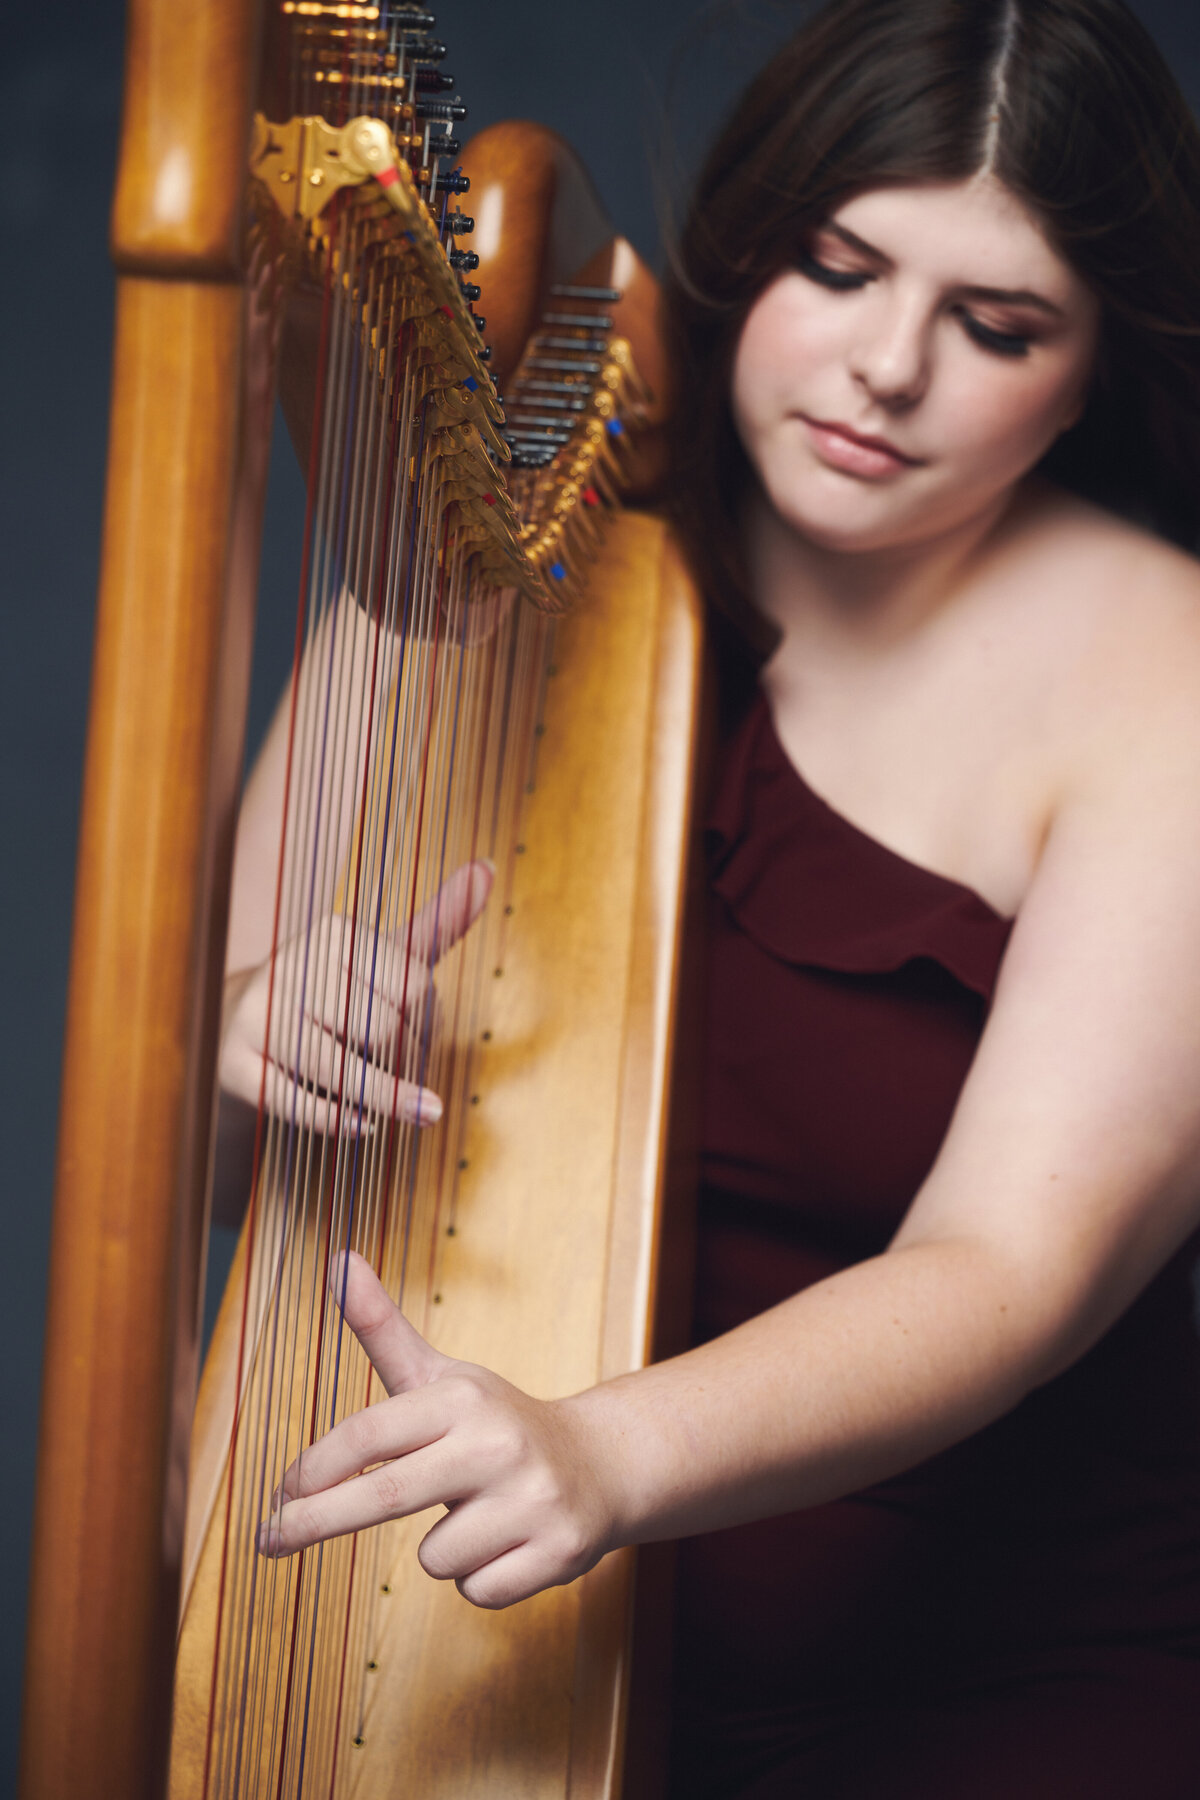 Senior picture with harp photographer -3